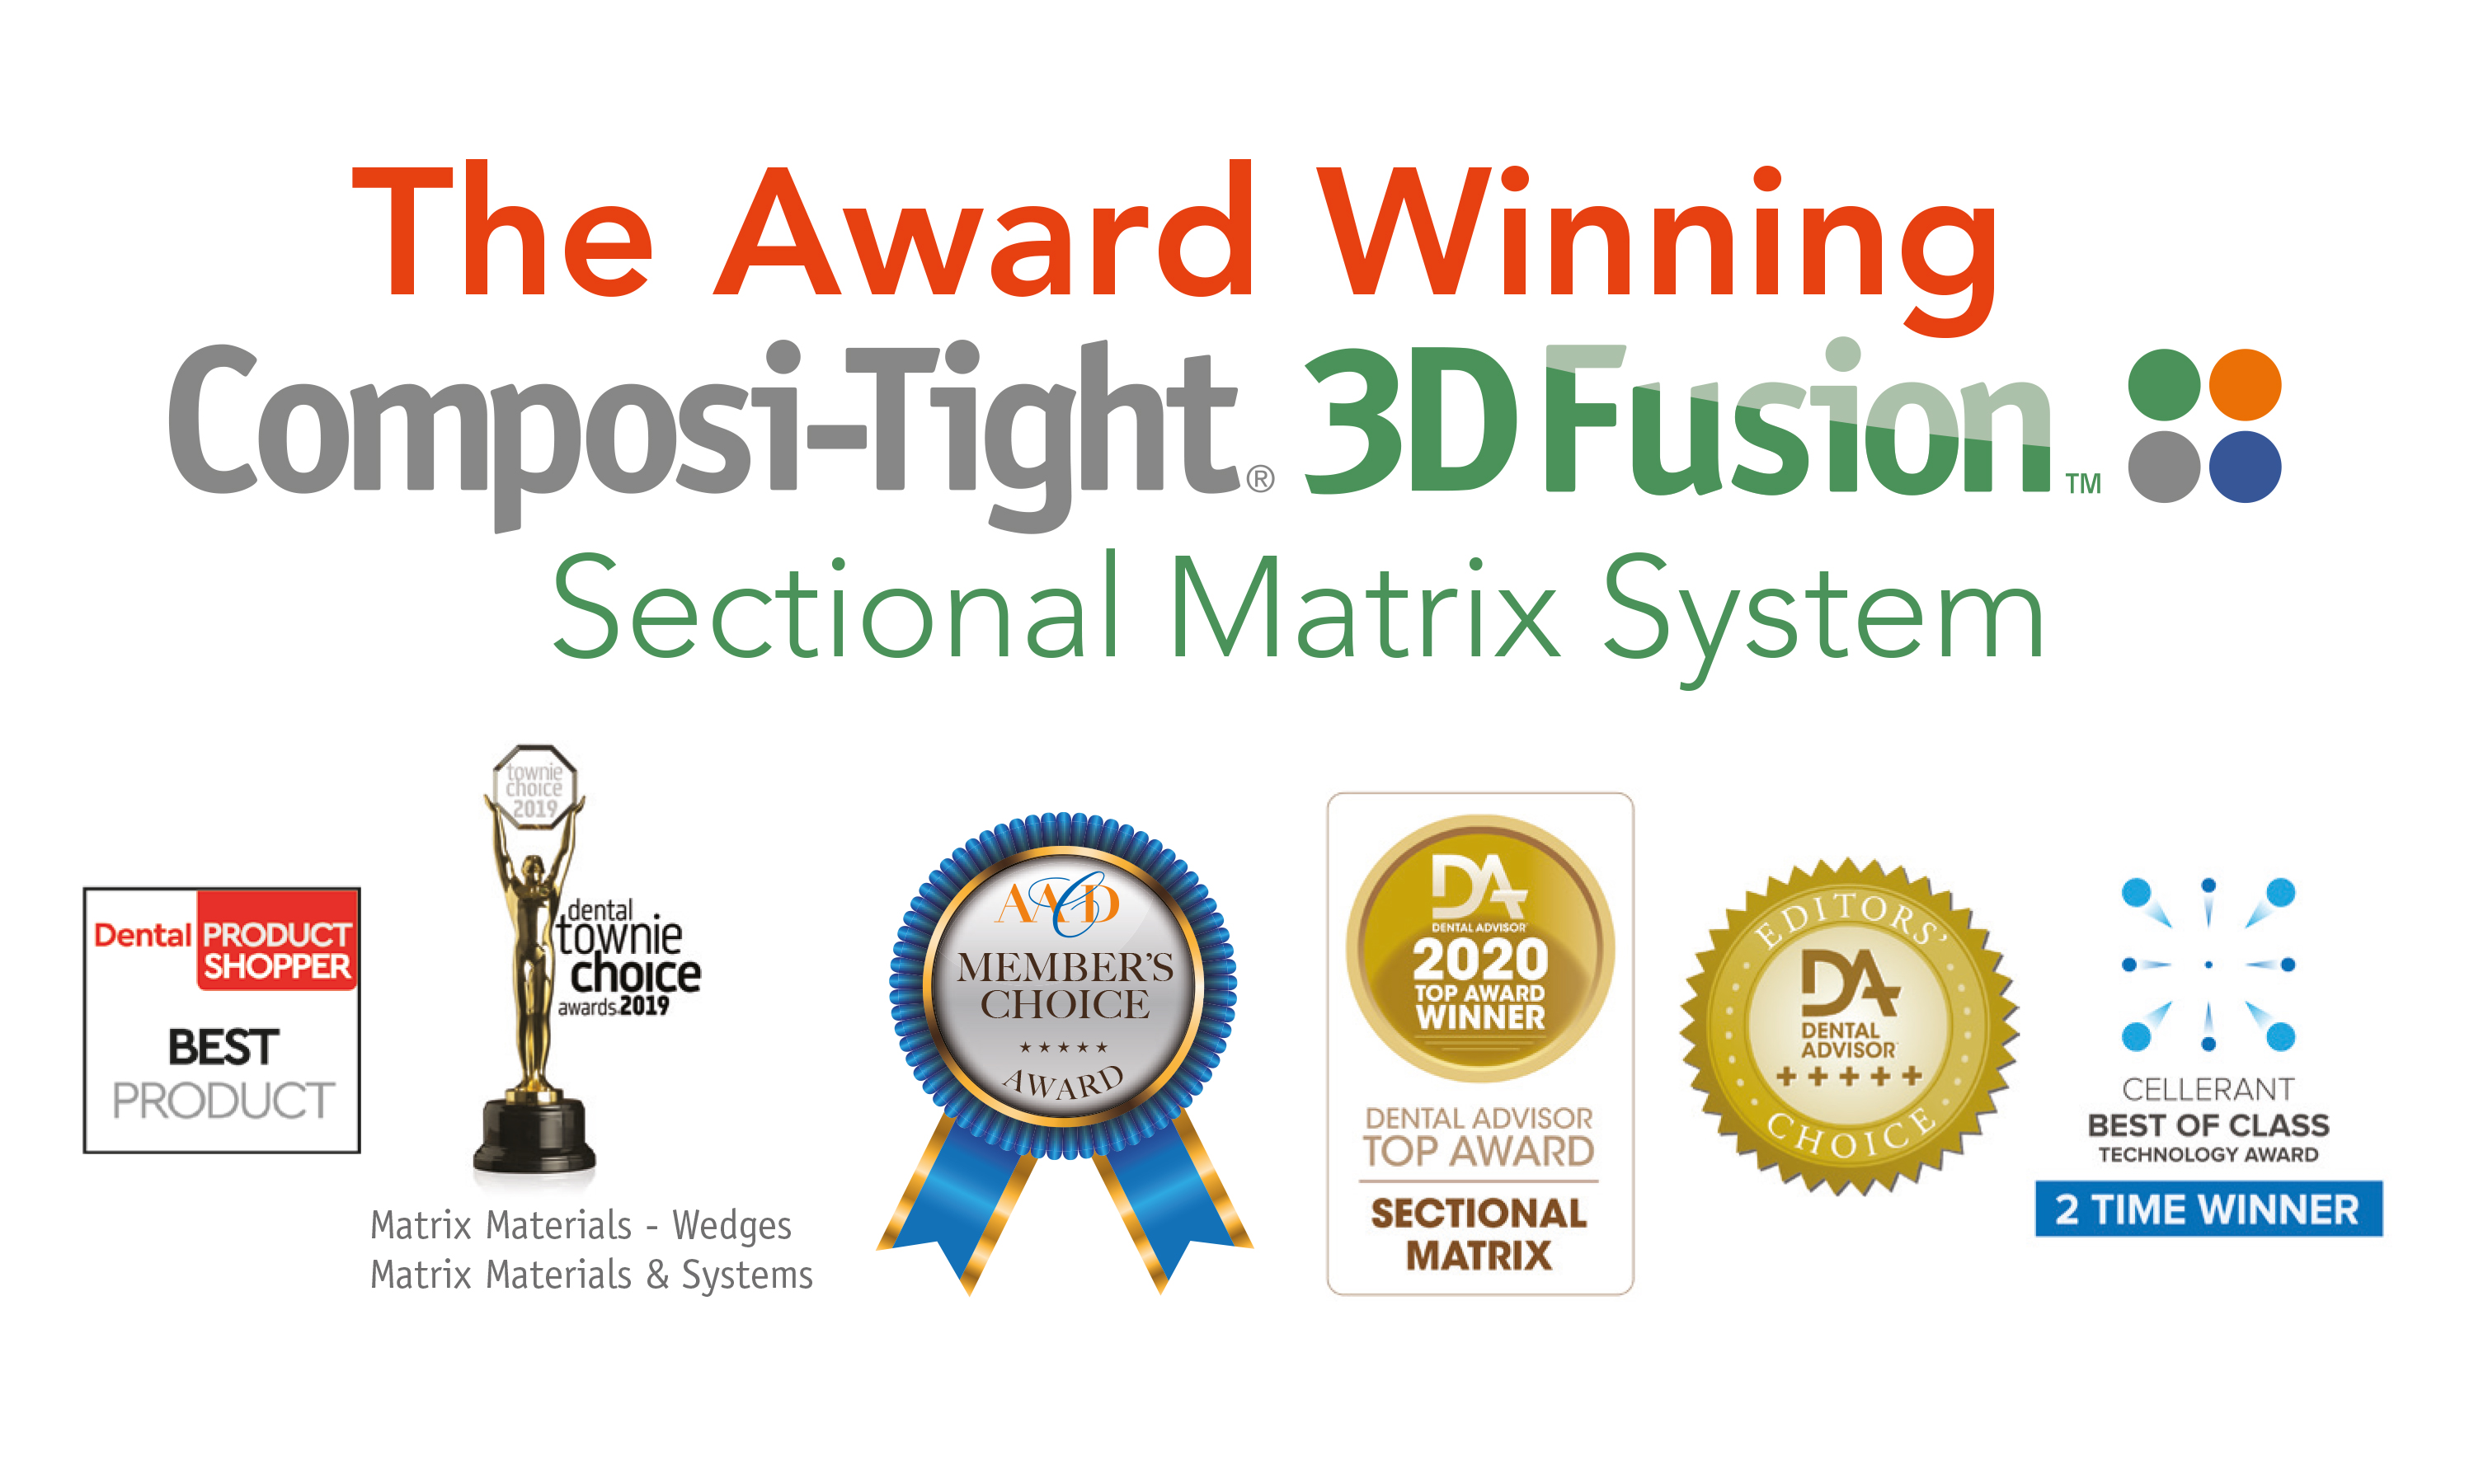 El sistema Composi-Tight® 3D Fusion TM de Garrison Dental Solutions, nombrado mejor sistema de matriz seccional en 2020 por THE DENTAL ADVISOR.